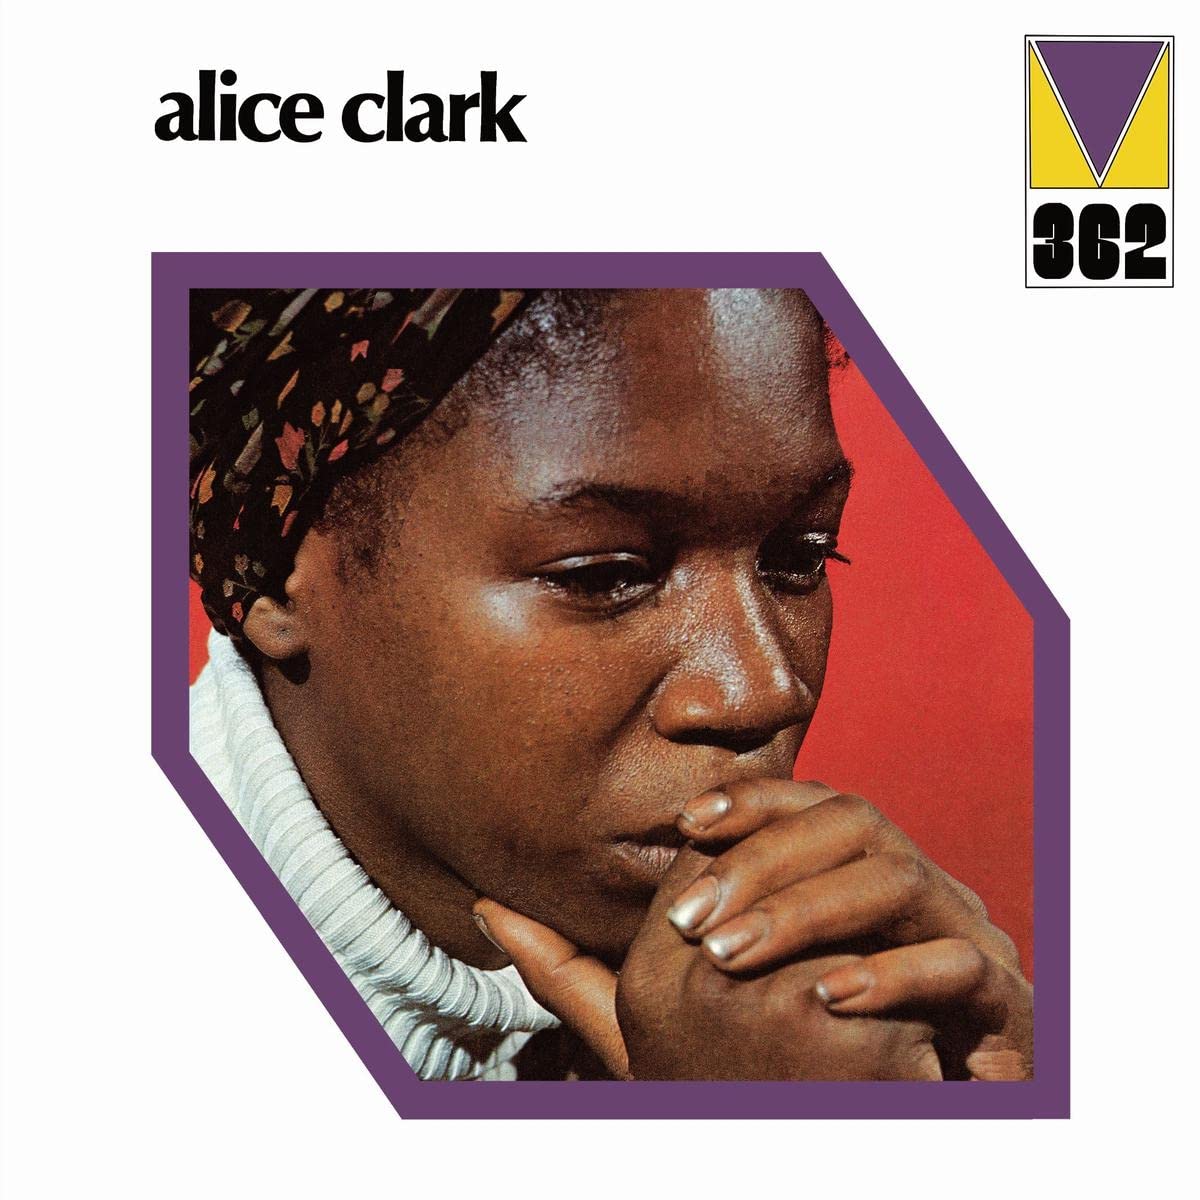 Clark, Alice - Alice Clark (2019 gatefold reissue) - Vinyl - New